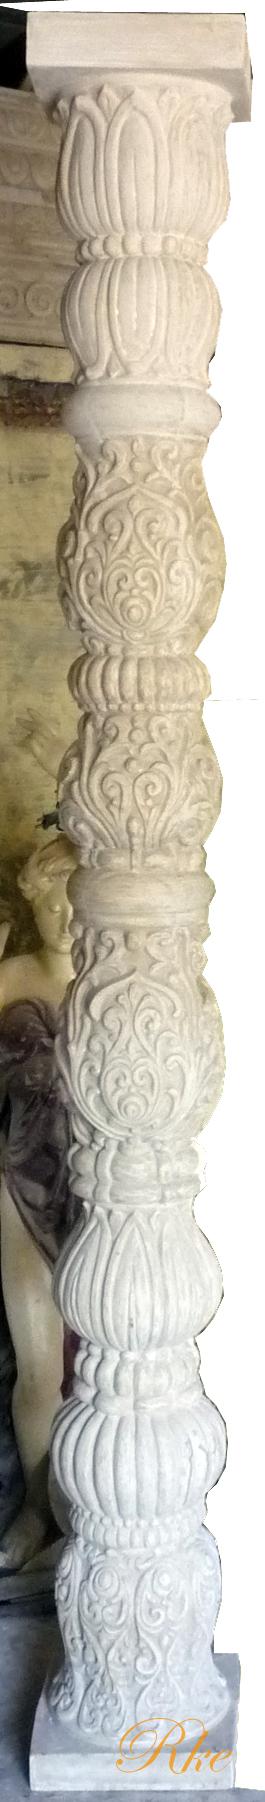 carved mandap pillar in cutwork design indian theme pillar Rajasthan style 